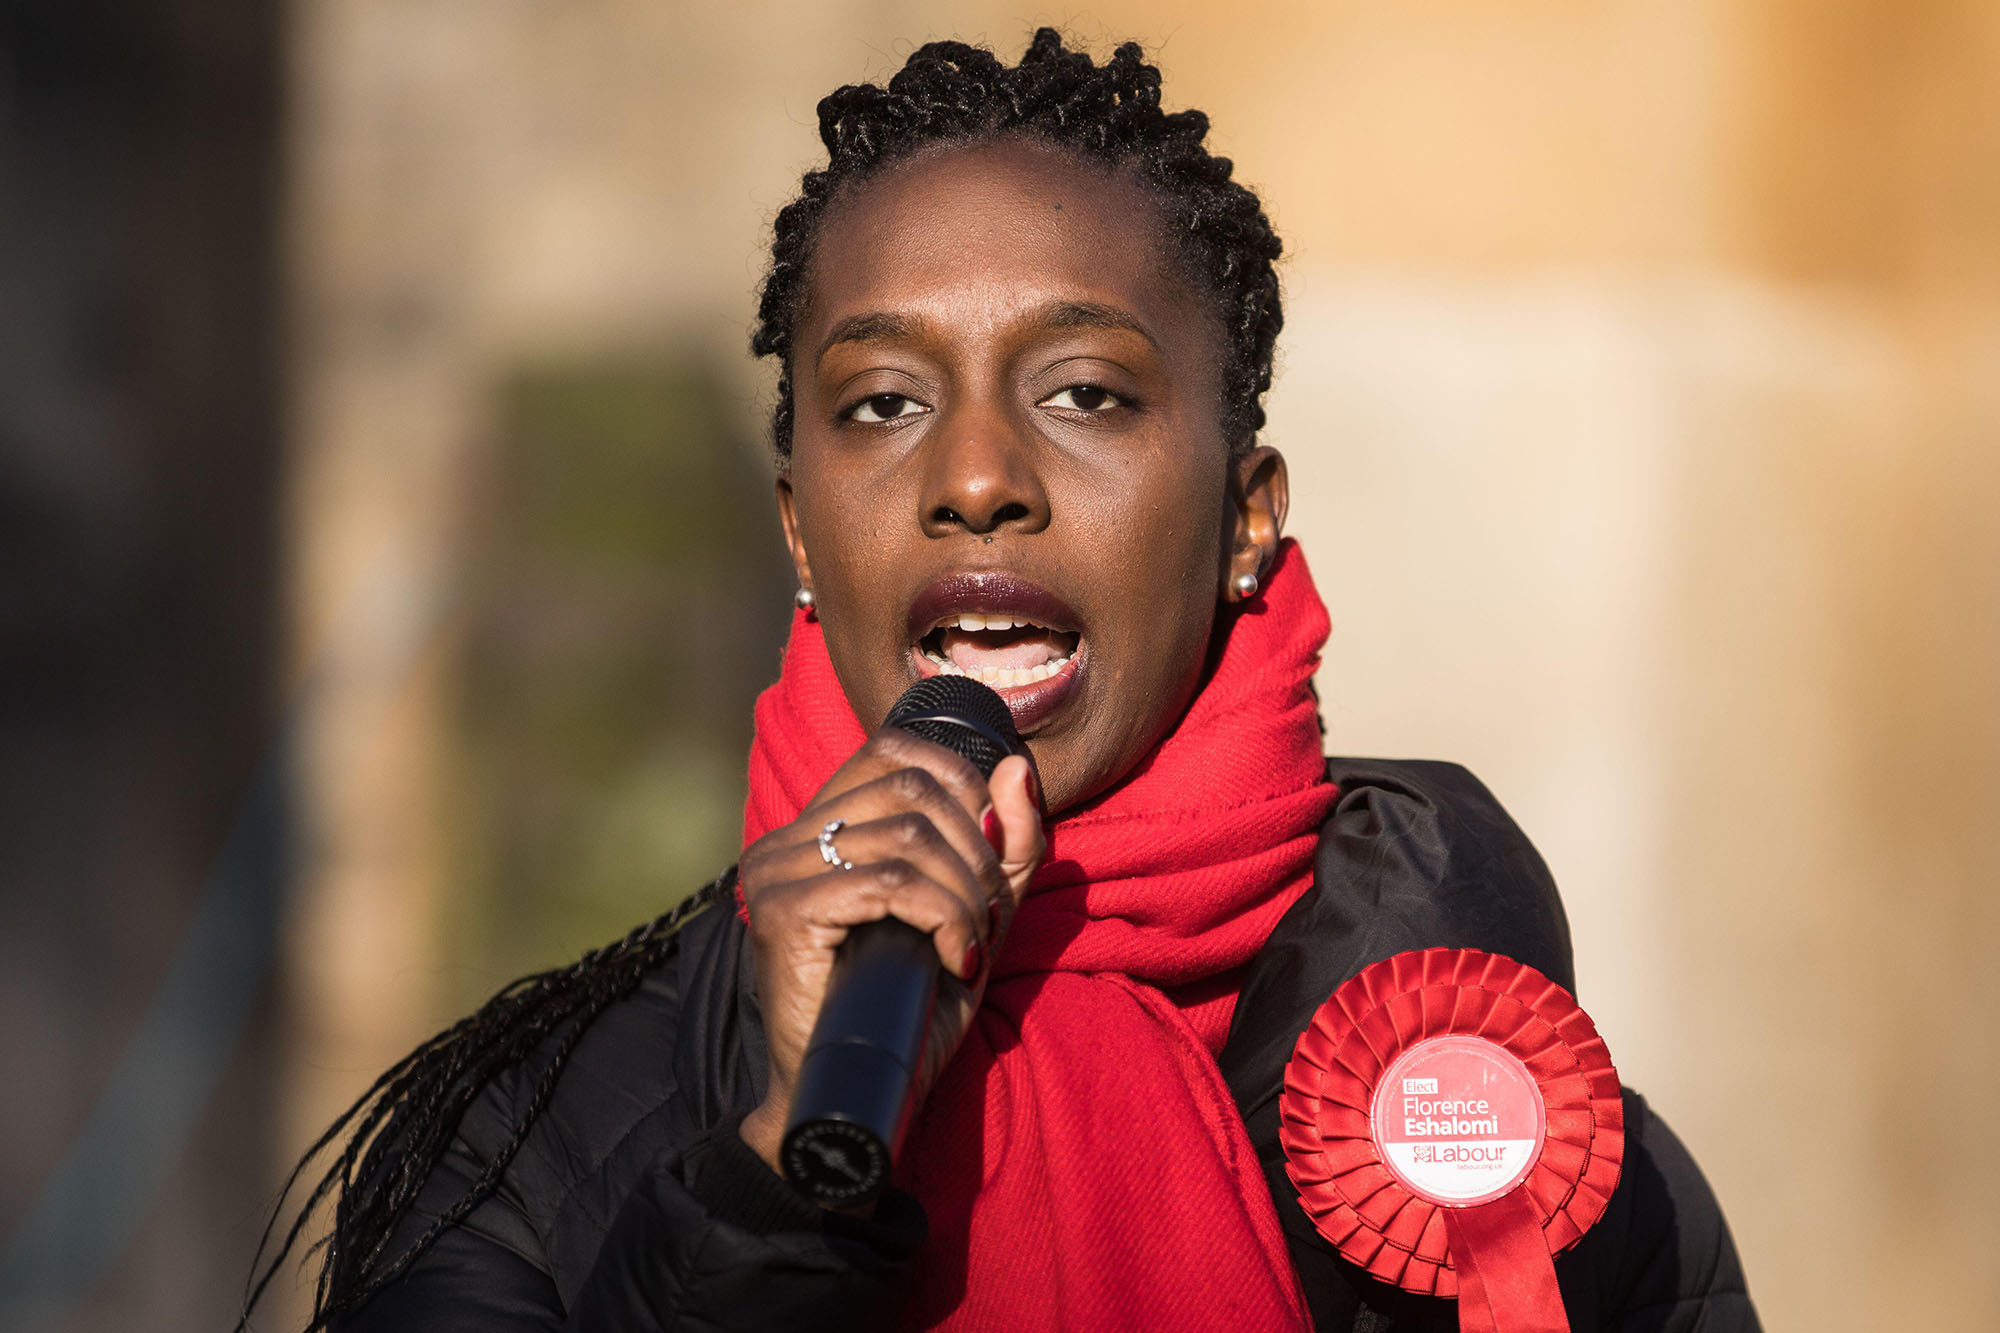 MP Florence Eshalomi